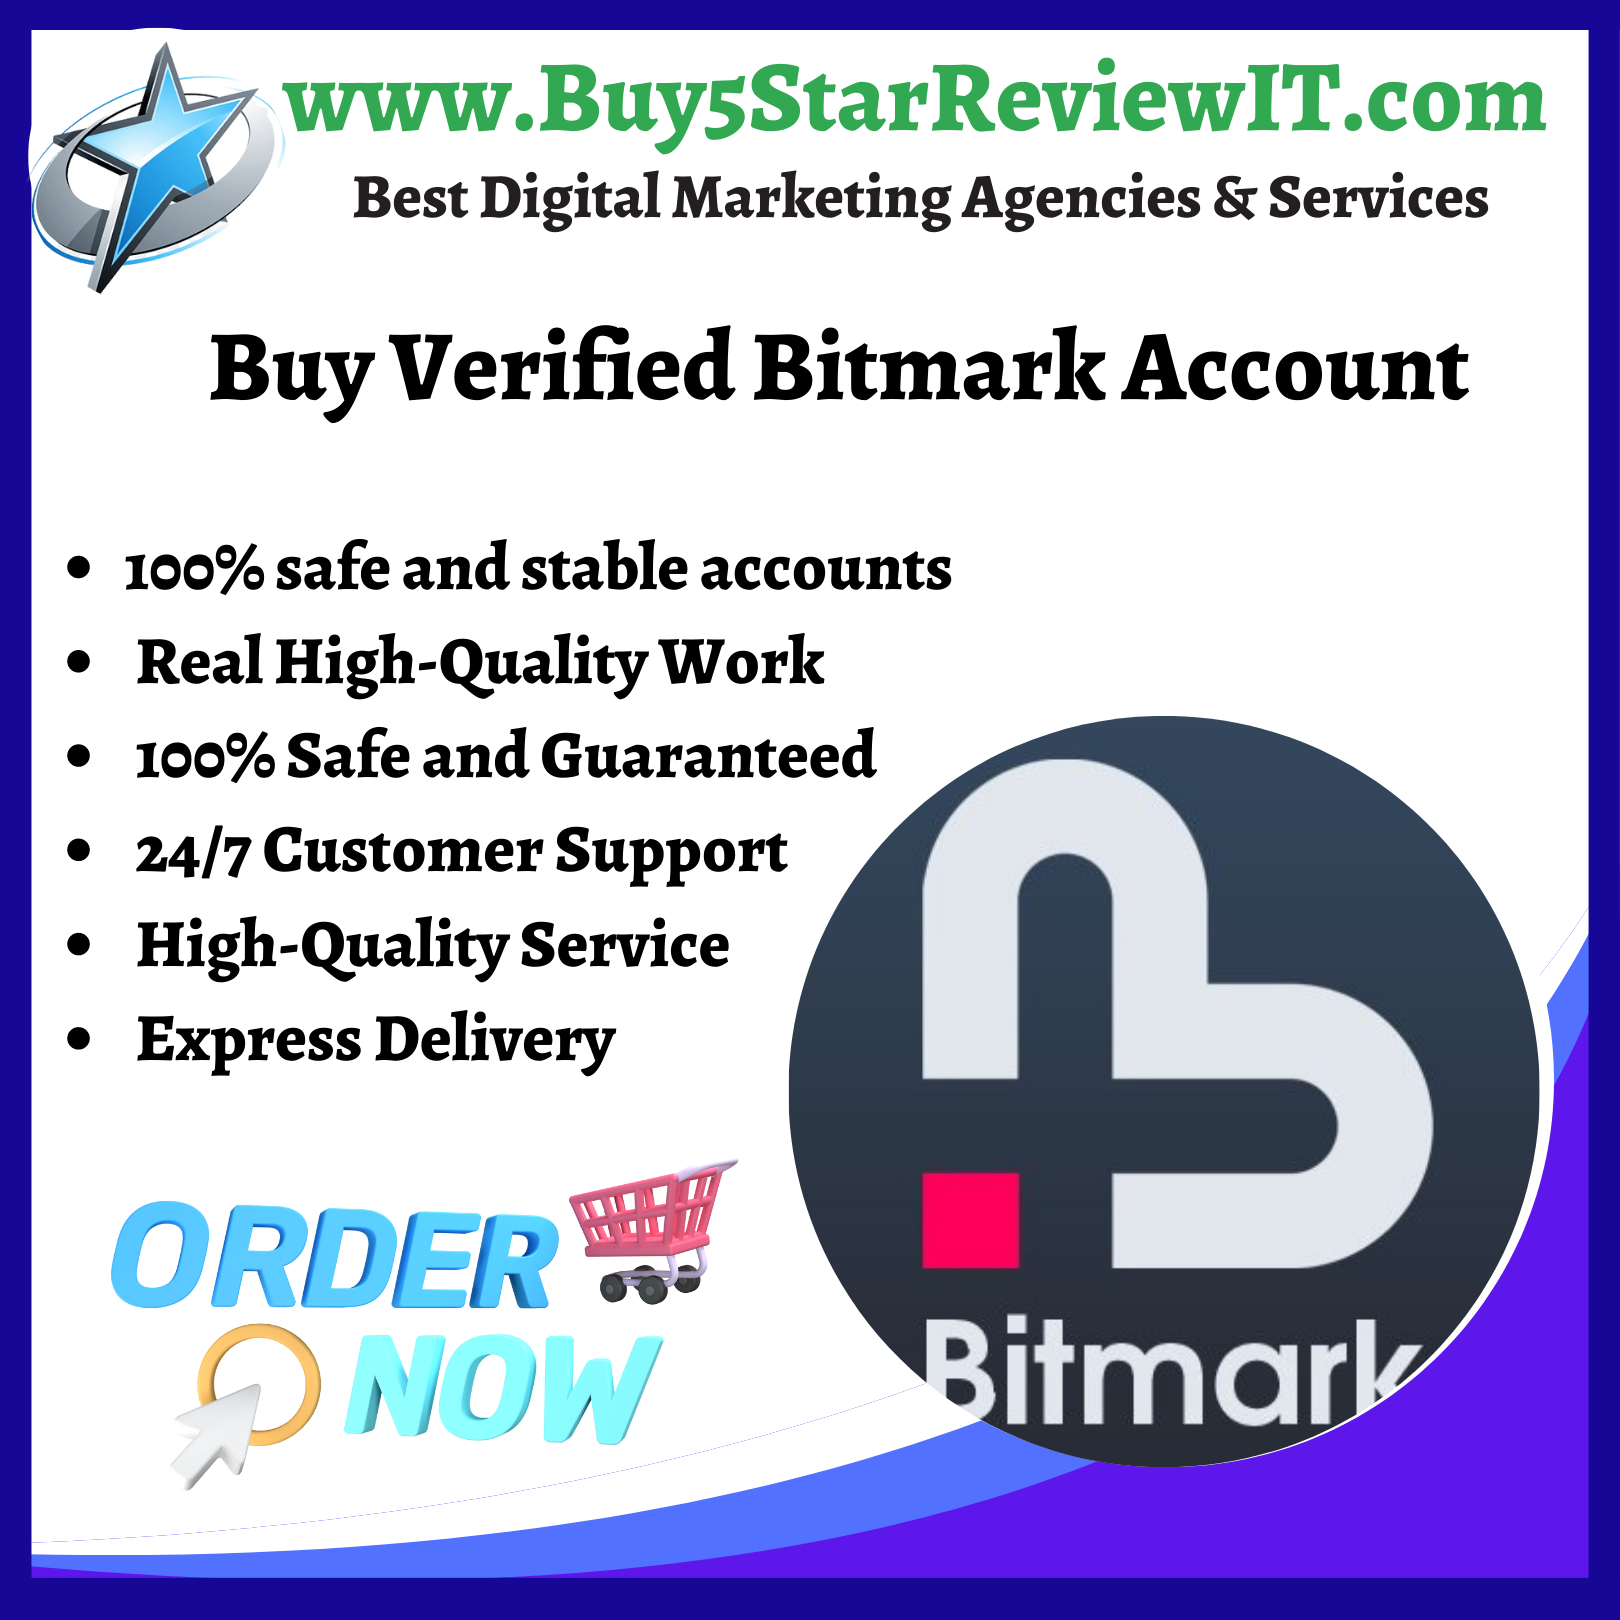 Buy Verified Bitmark Account - Buy5StarReviewIT